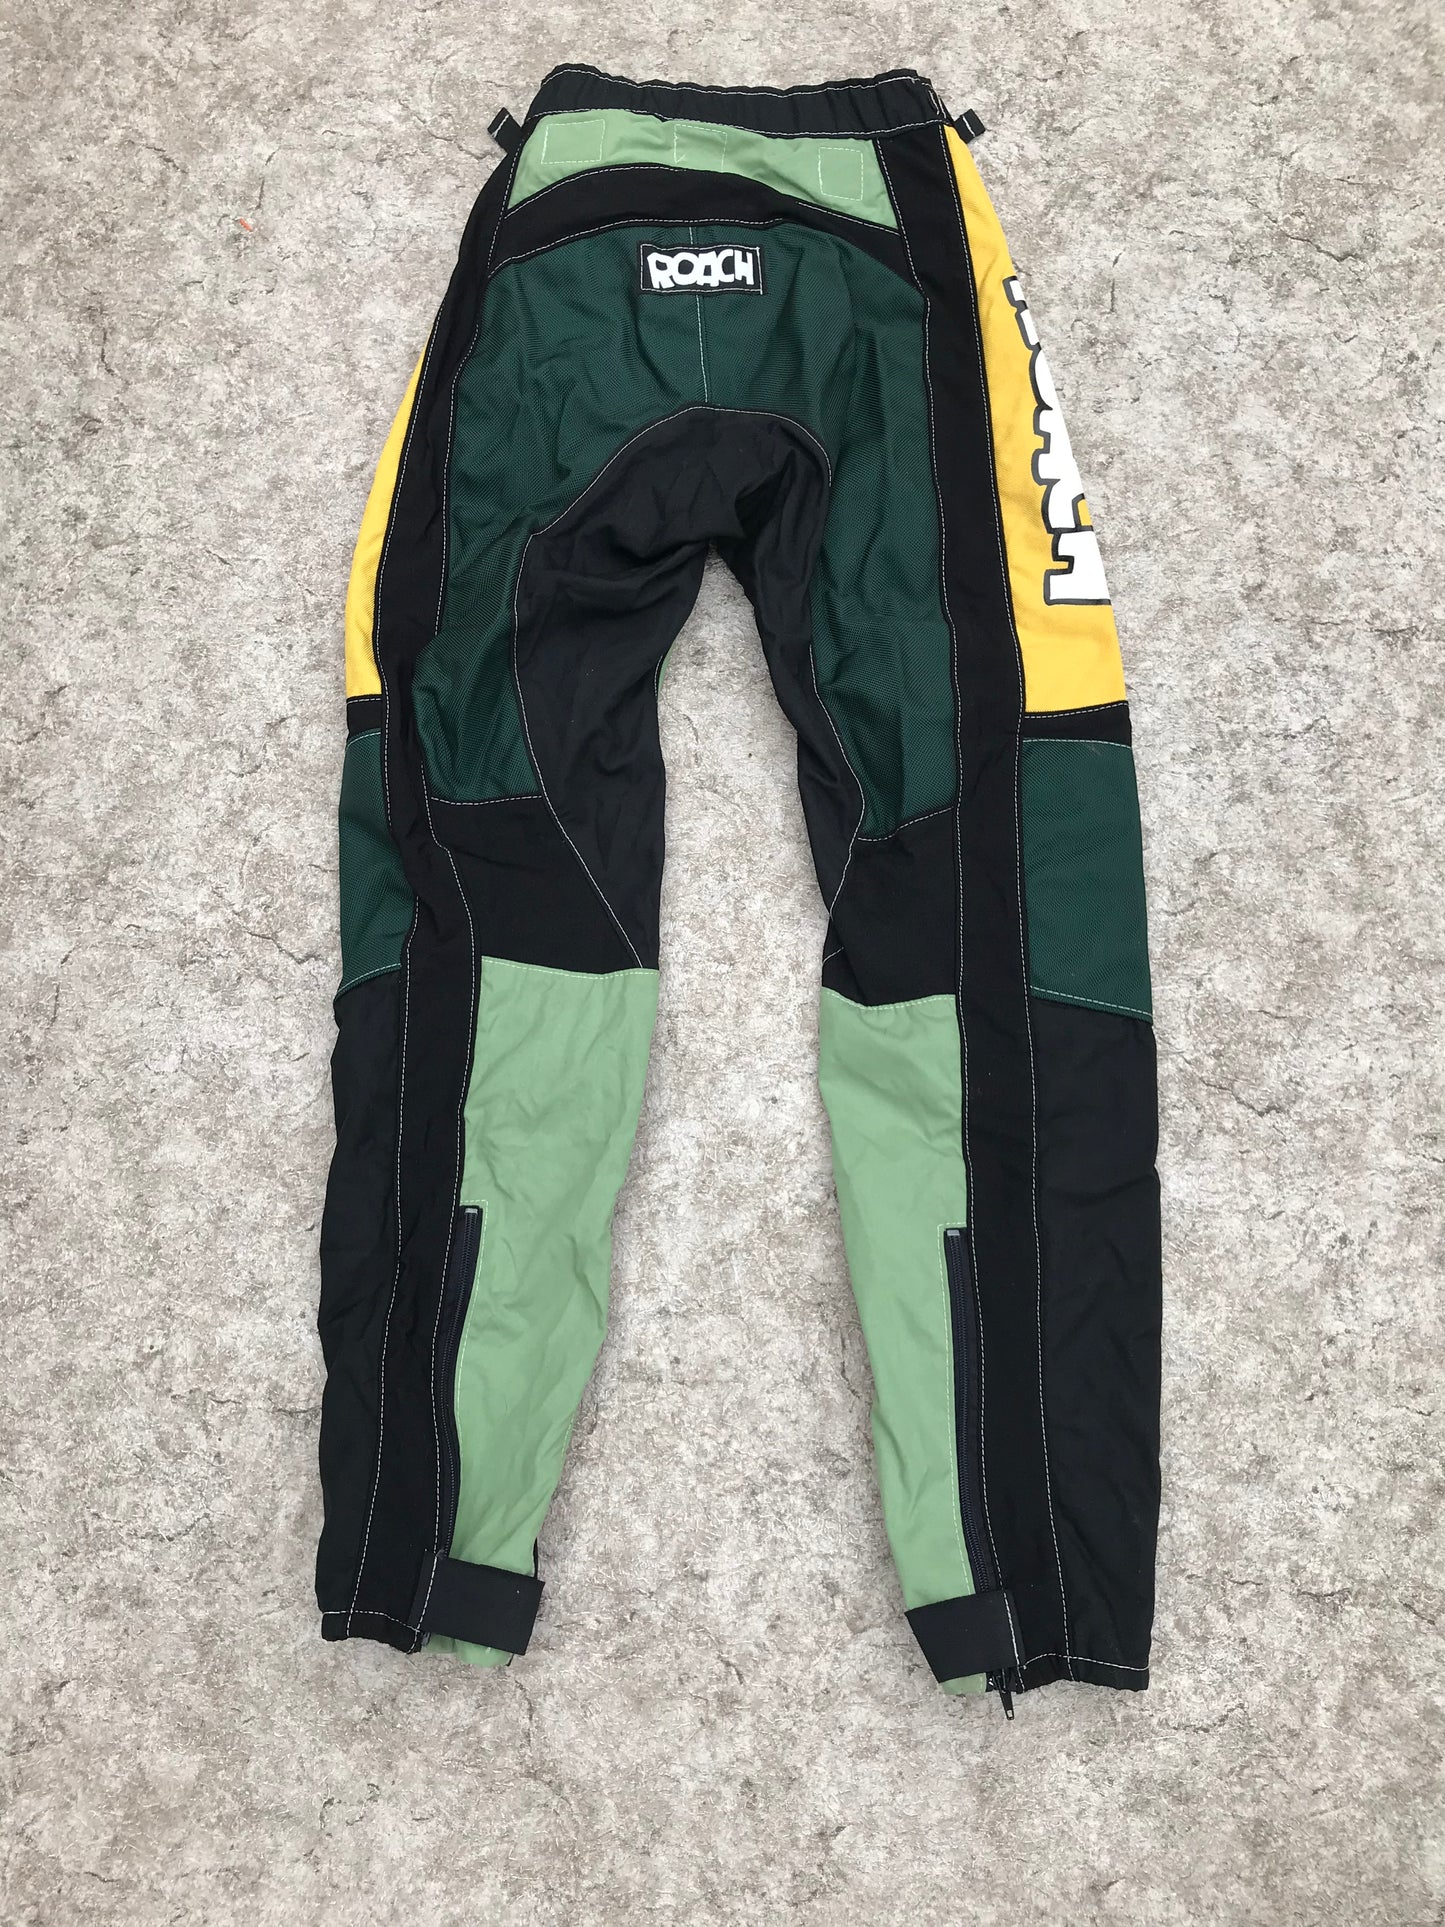 Motocross BMX Dirt Bike Pants Men's Size 30 inch Small Roach Black Green Gold Excellent